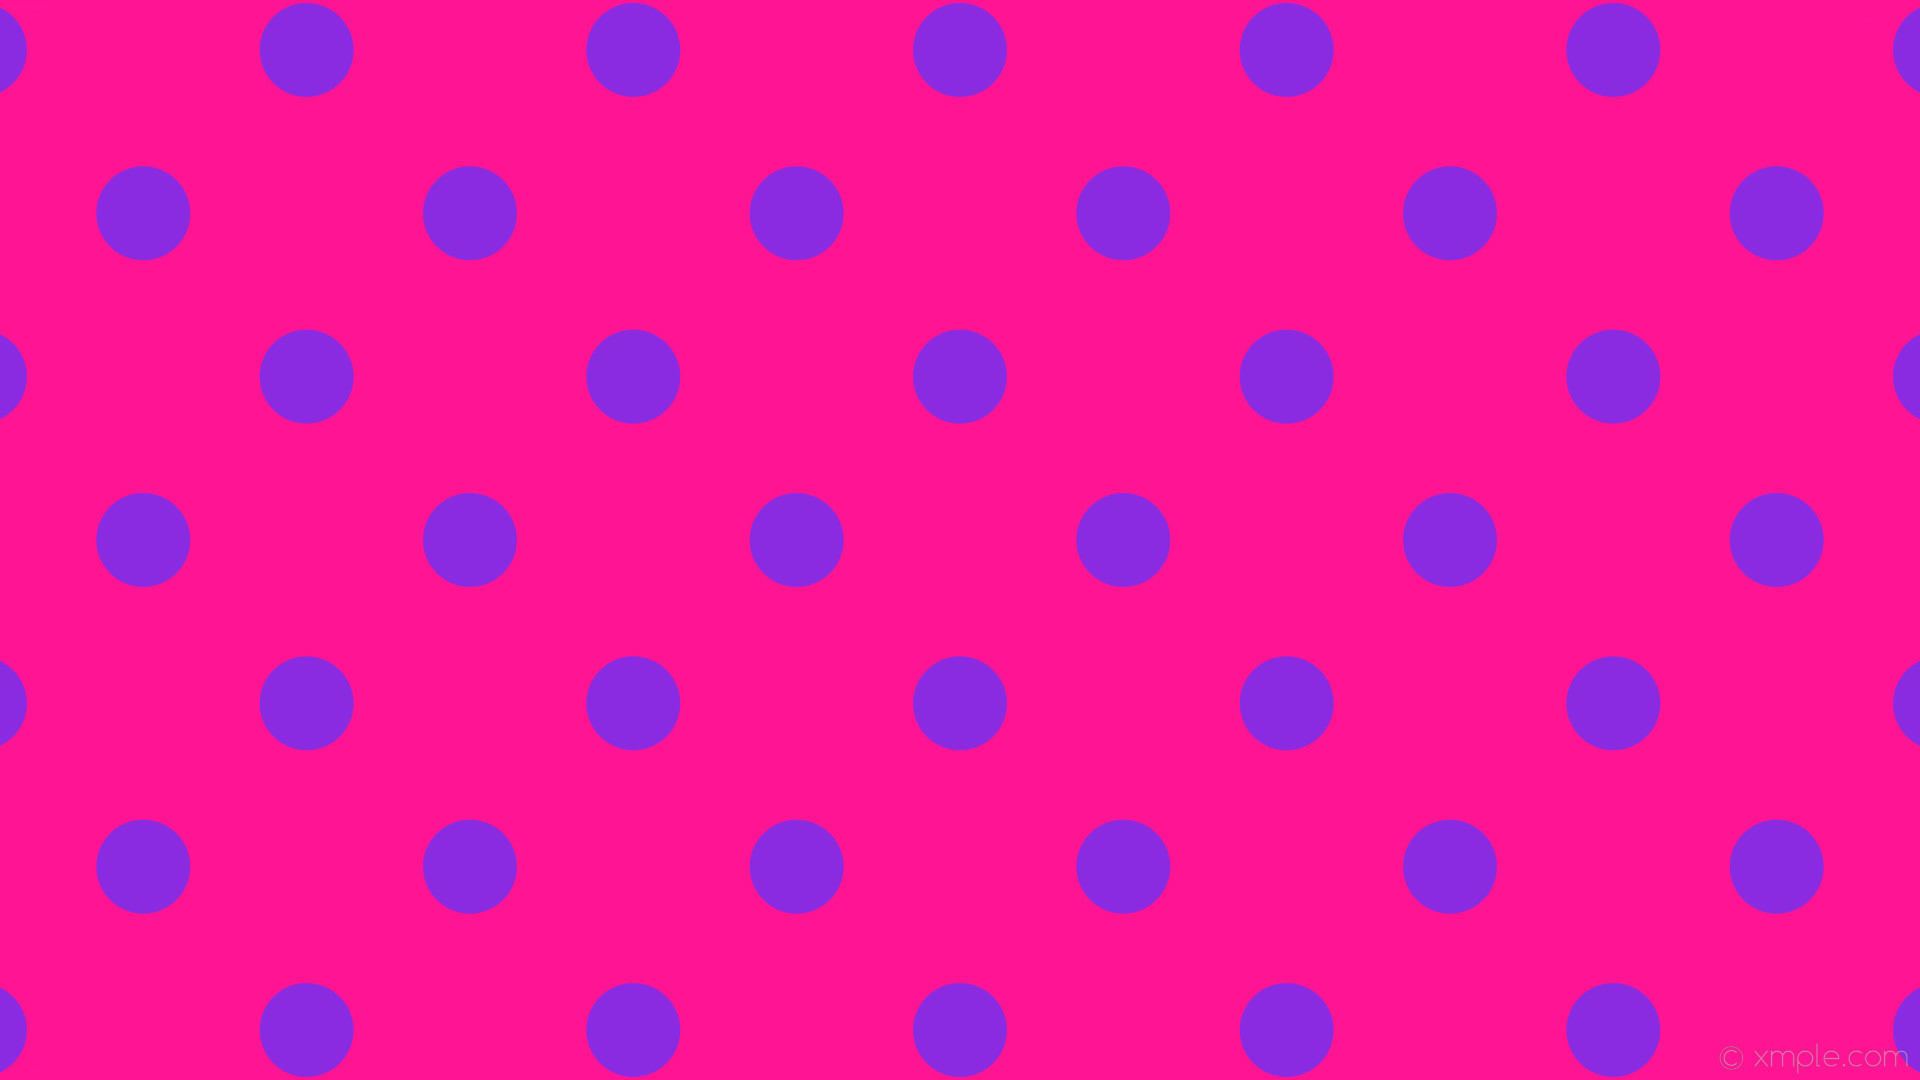 1920x1080 wallpaper polka pink purple dots spots deep pink blue violet #ff1493  #8a2be2 45Â°